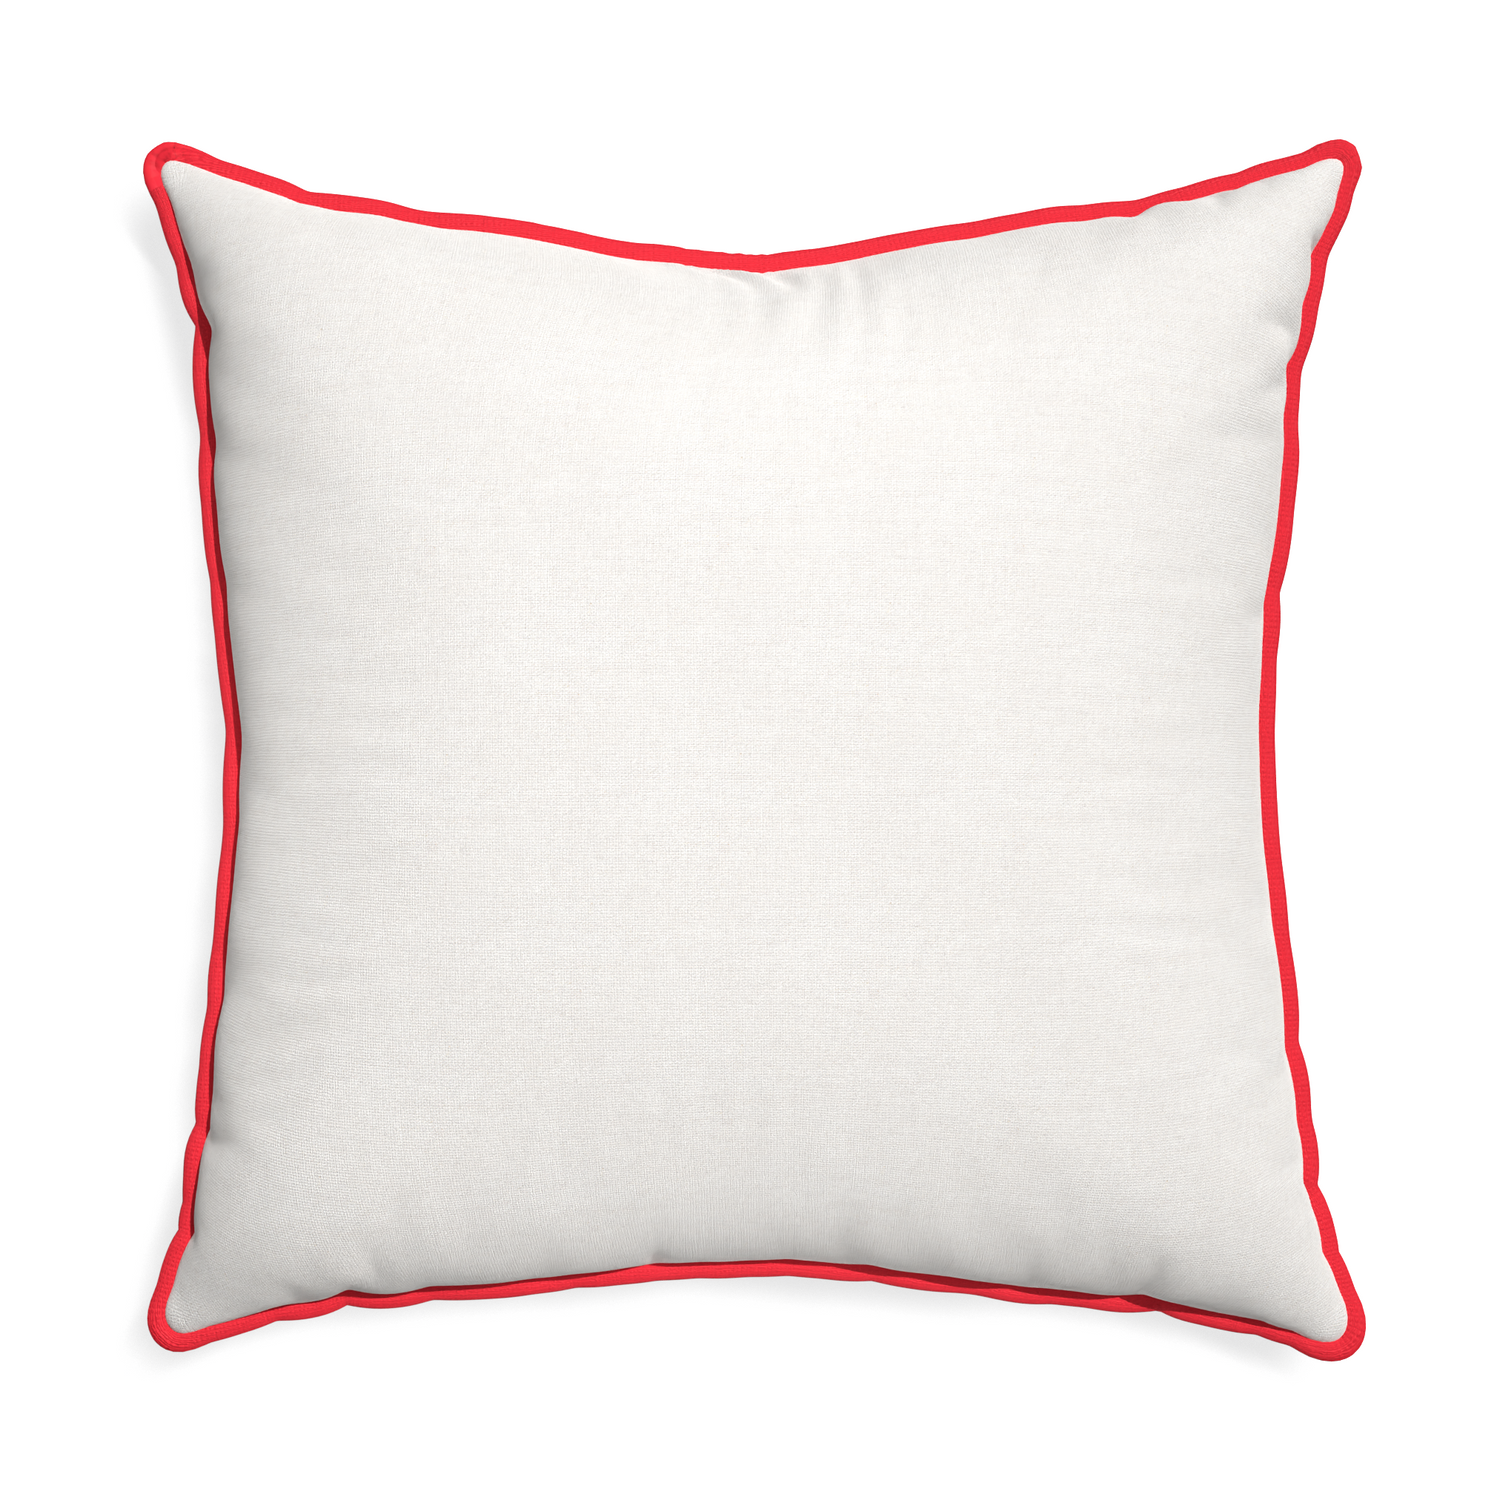 Euro-sham flour custom pillow with cherry piping on white background